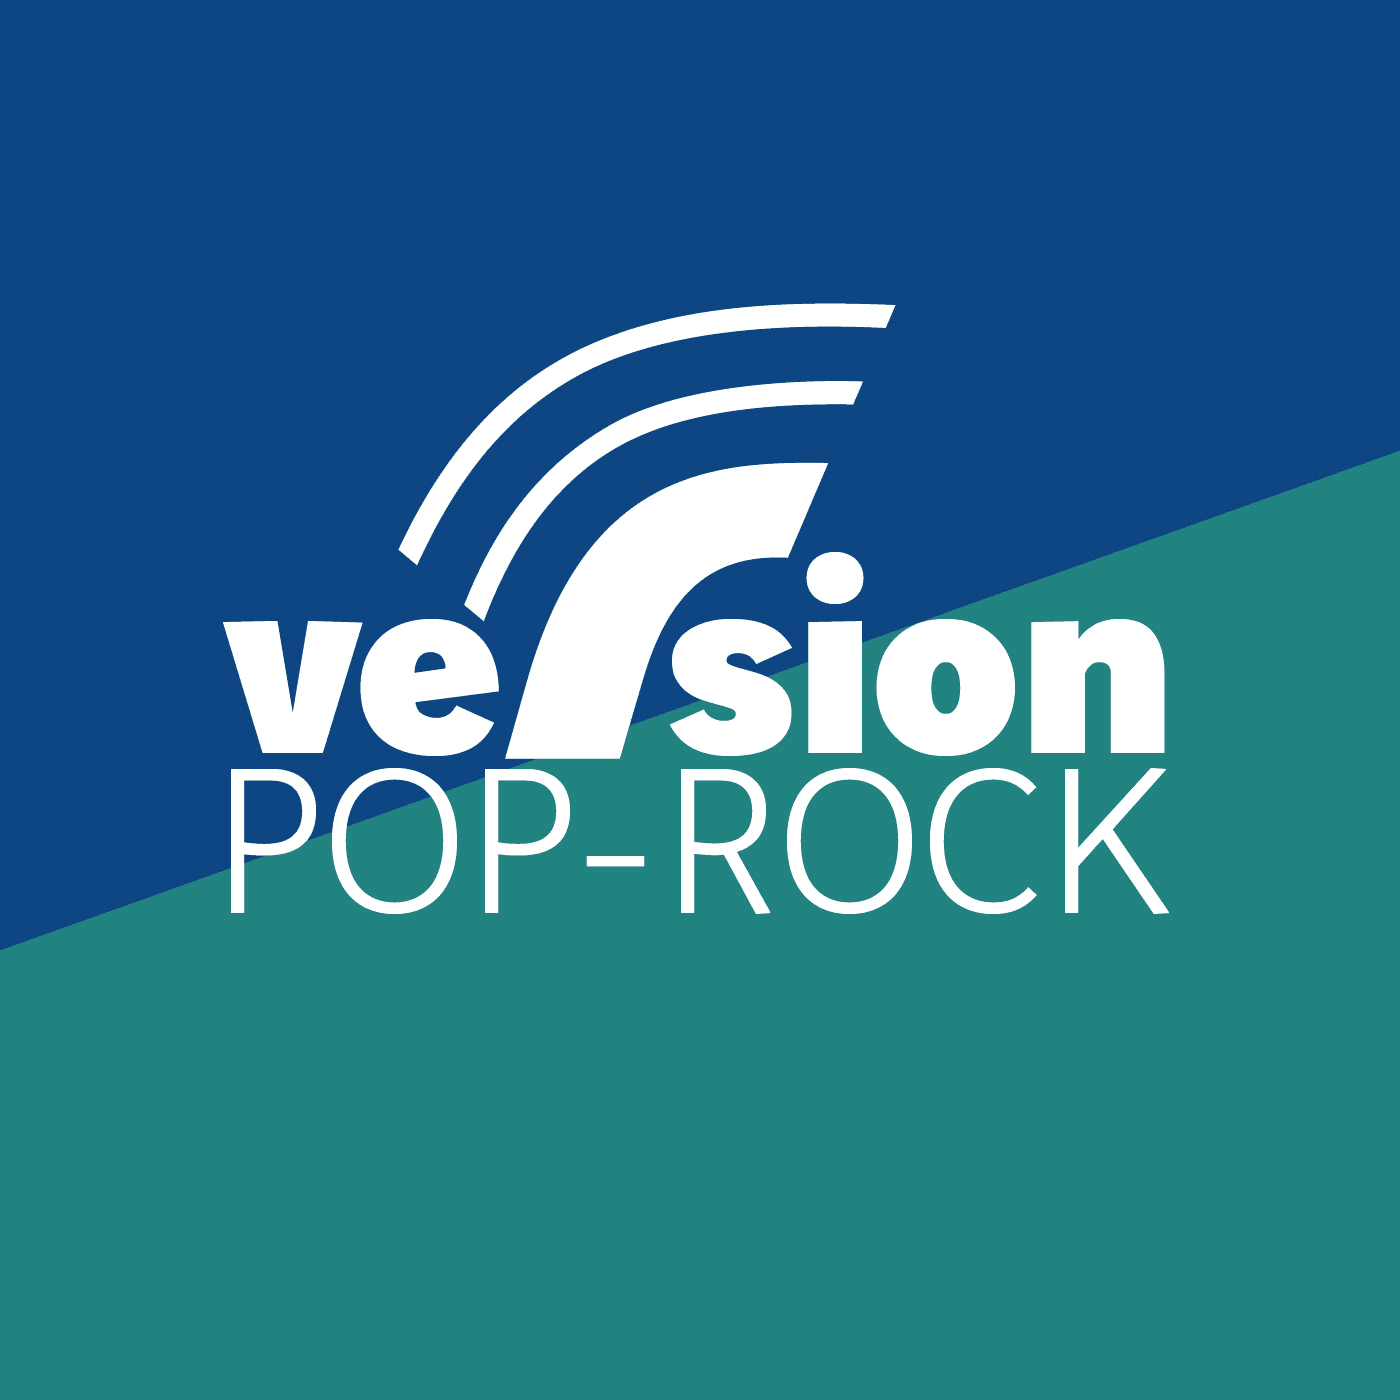 Version Pop-Rock